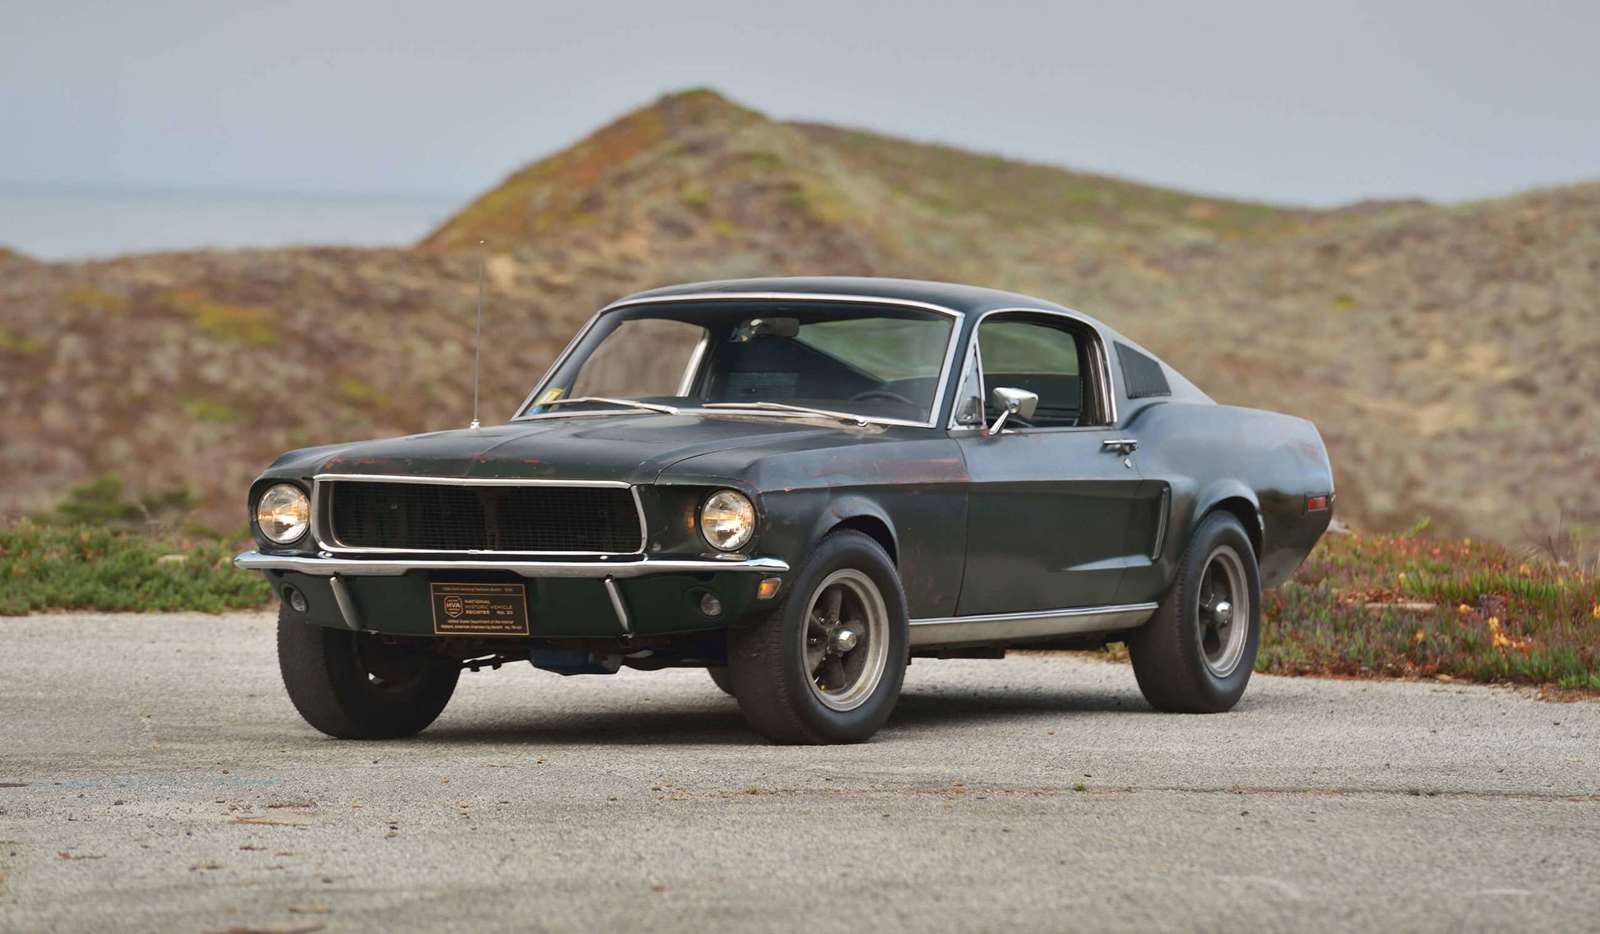 Original Bullitt Mustang sells for $3.4 million at auction